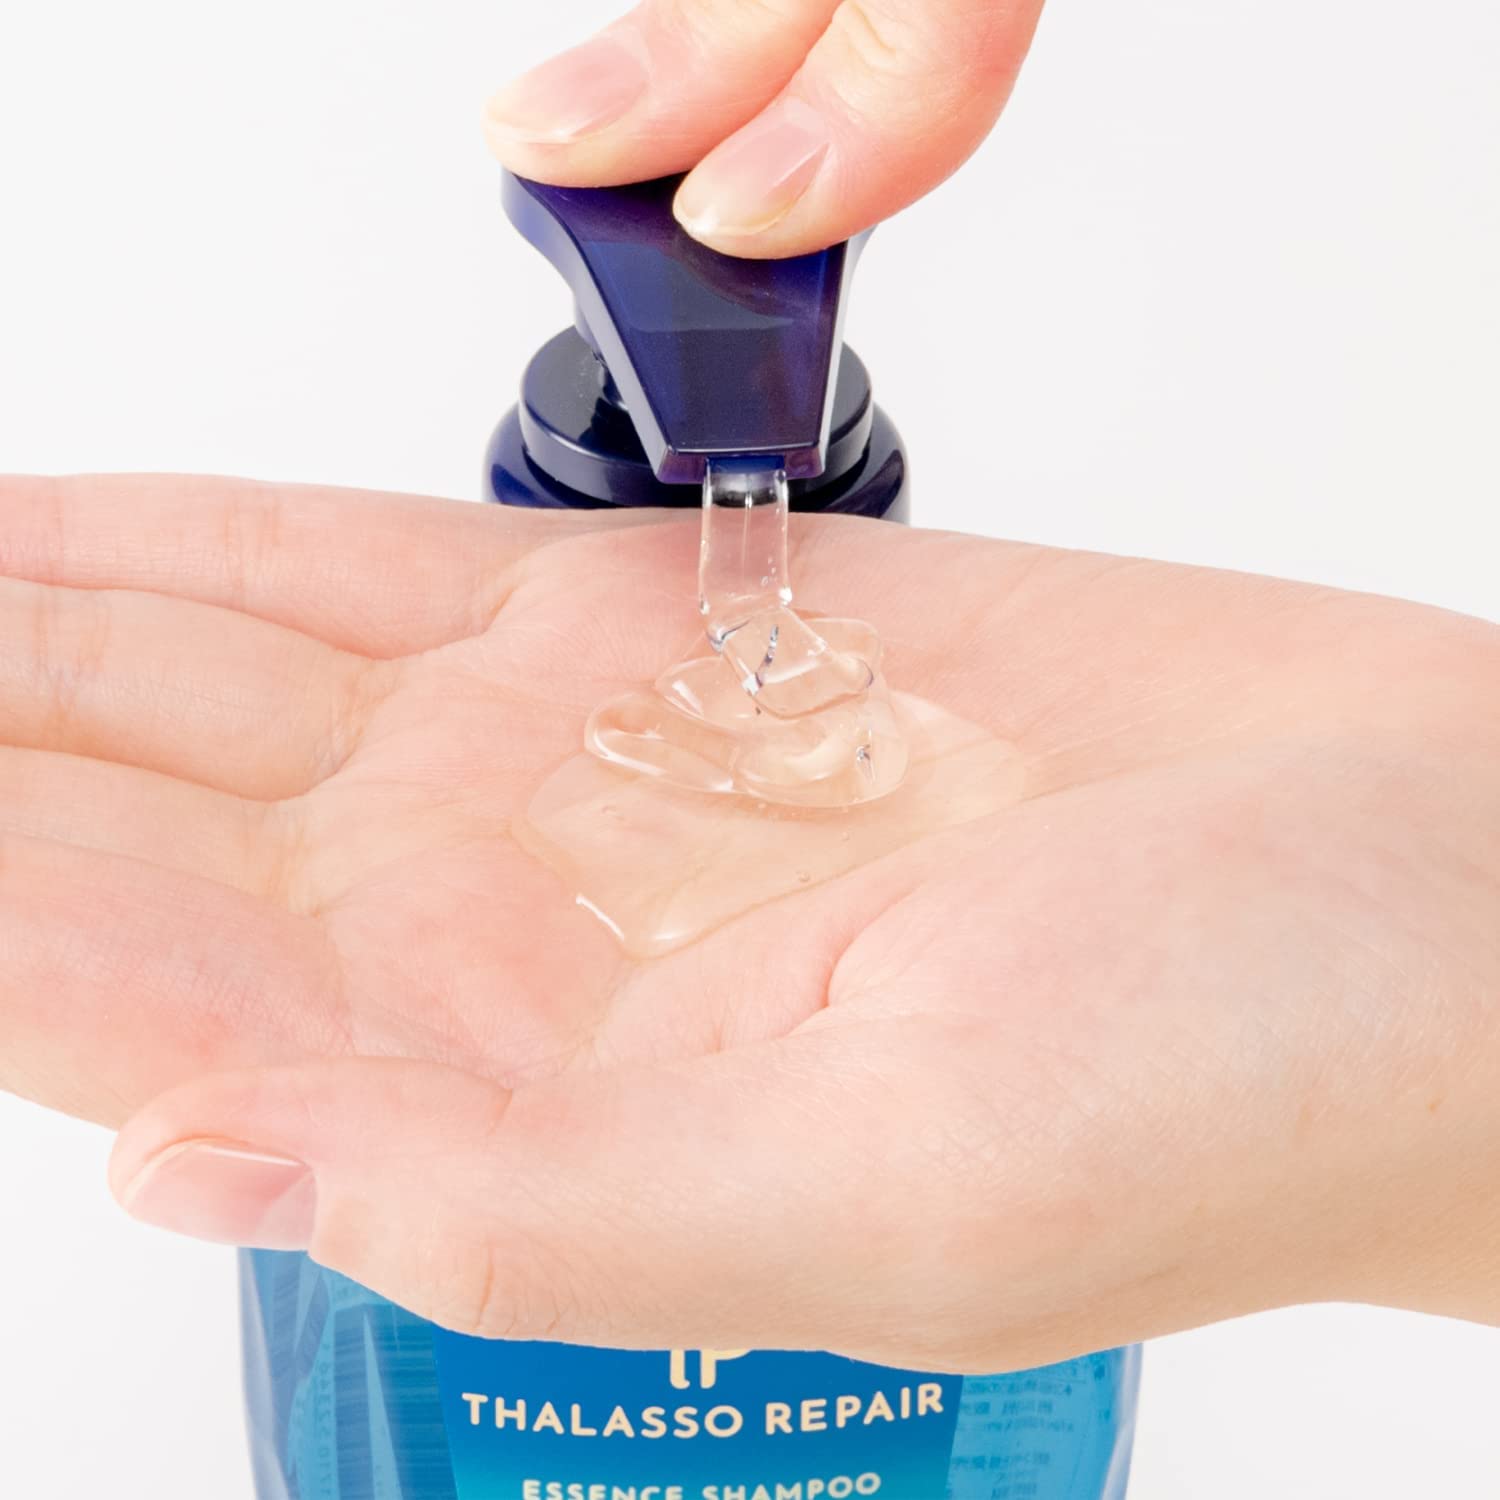 KOSE Jureme iP Thalasso Repair Repair Beauty Shampoo (Moist & Smooth) Refill 340mL